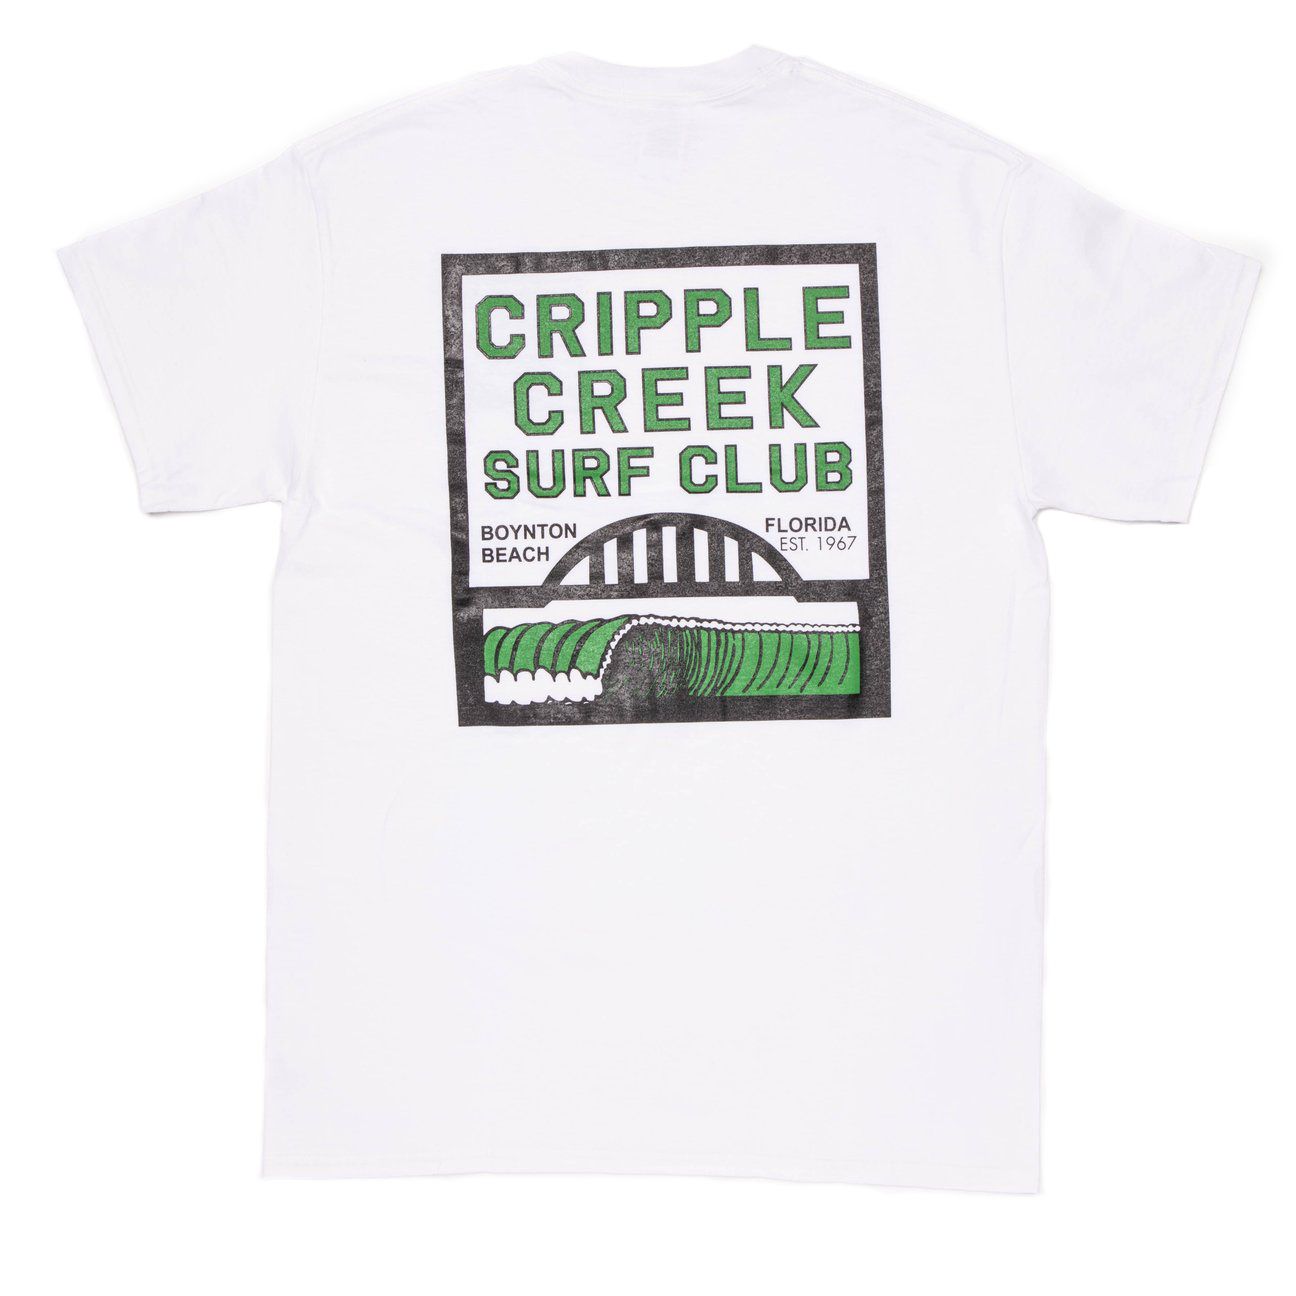 Cripple Creek Club Shirt  - Original Blank